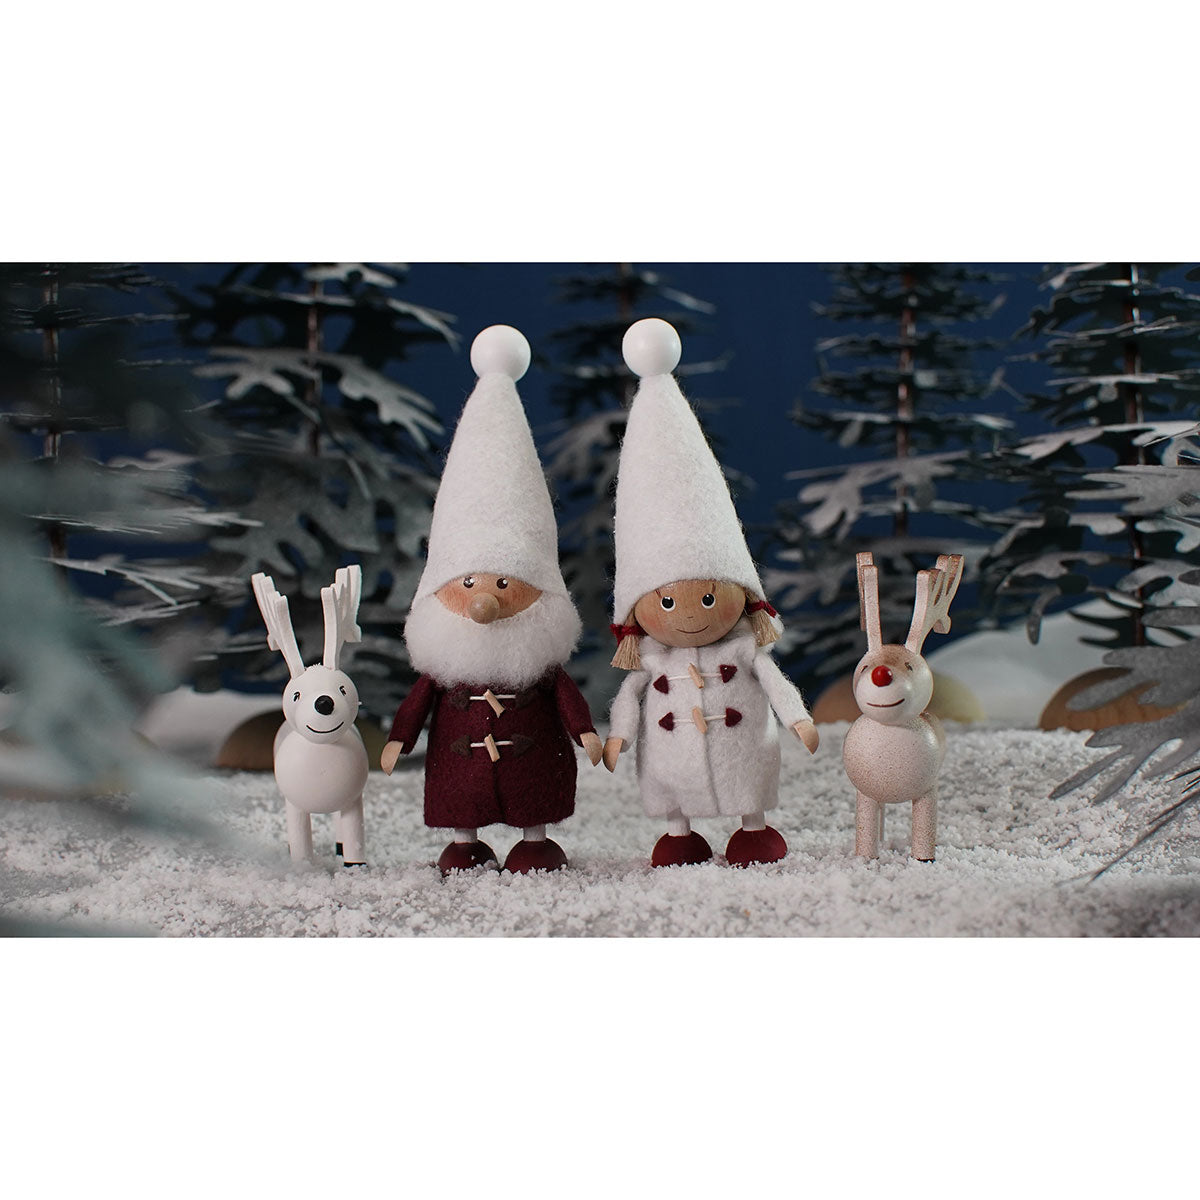 Nordika Nisse ノルディカ ニッセ クリスマス 木製人形 トナカイ ブラウン 北欧雑貨